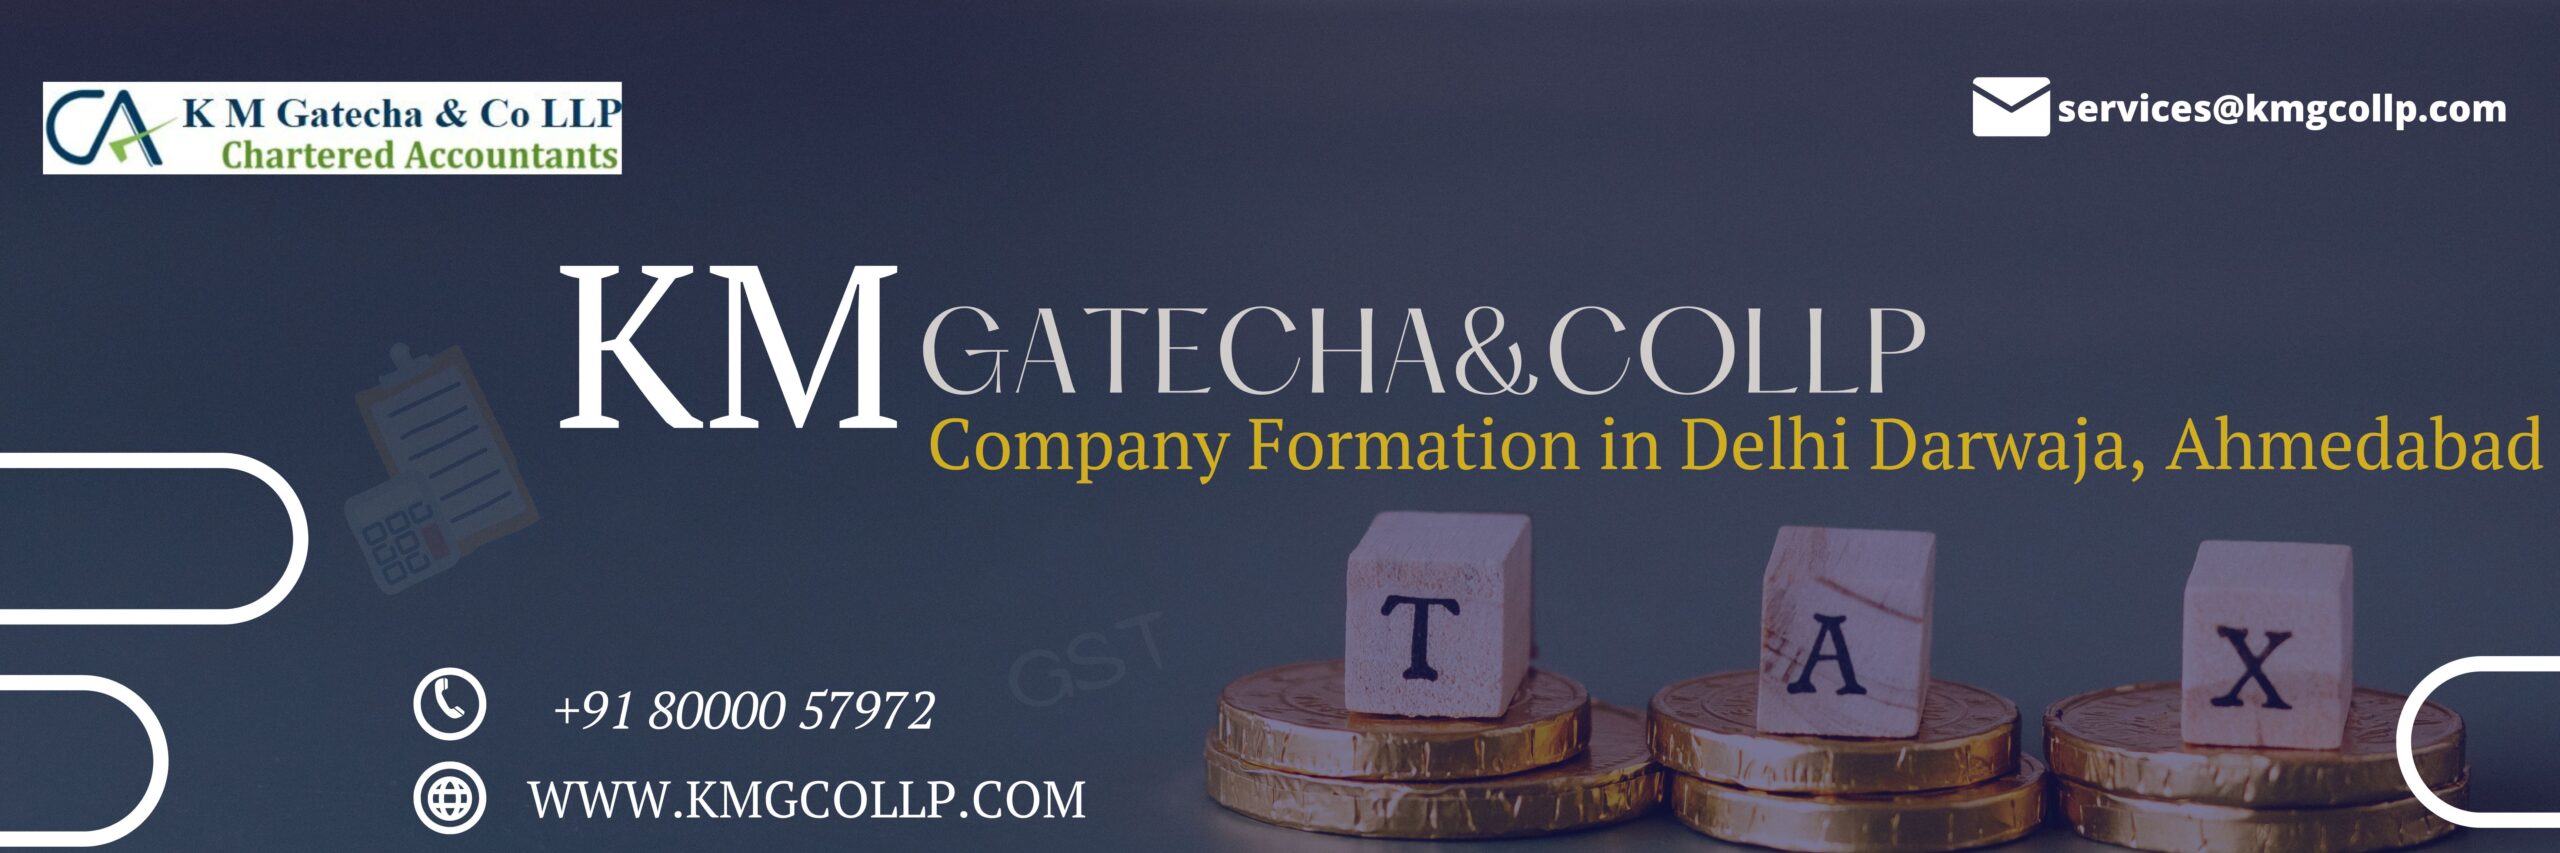 Company Formation in Delhi Darwaja, Ahmedabad